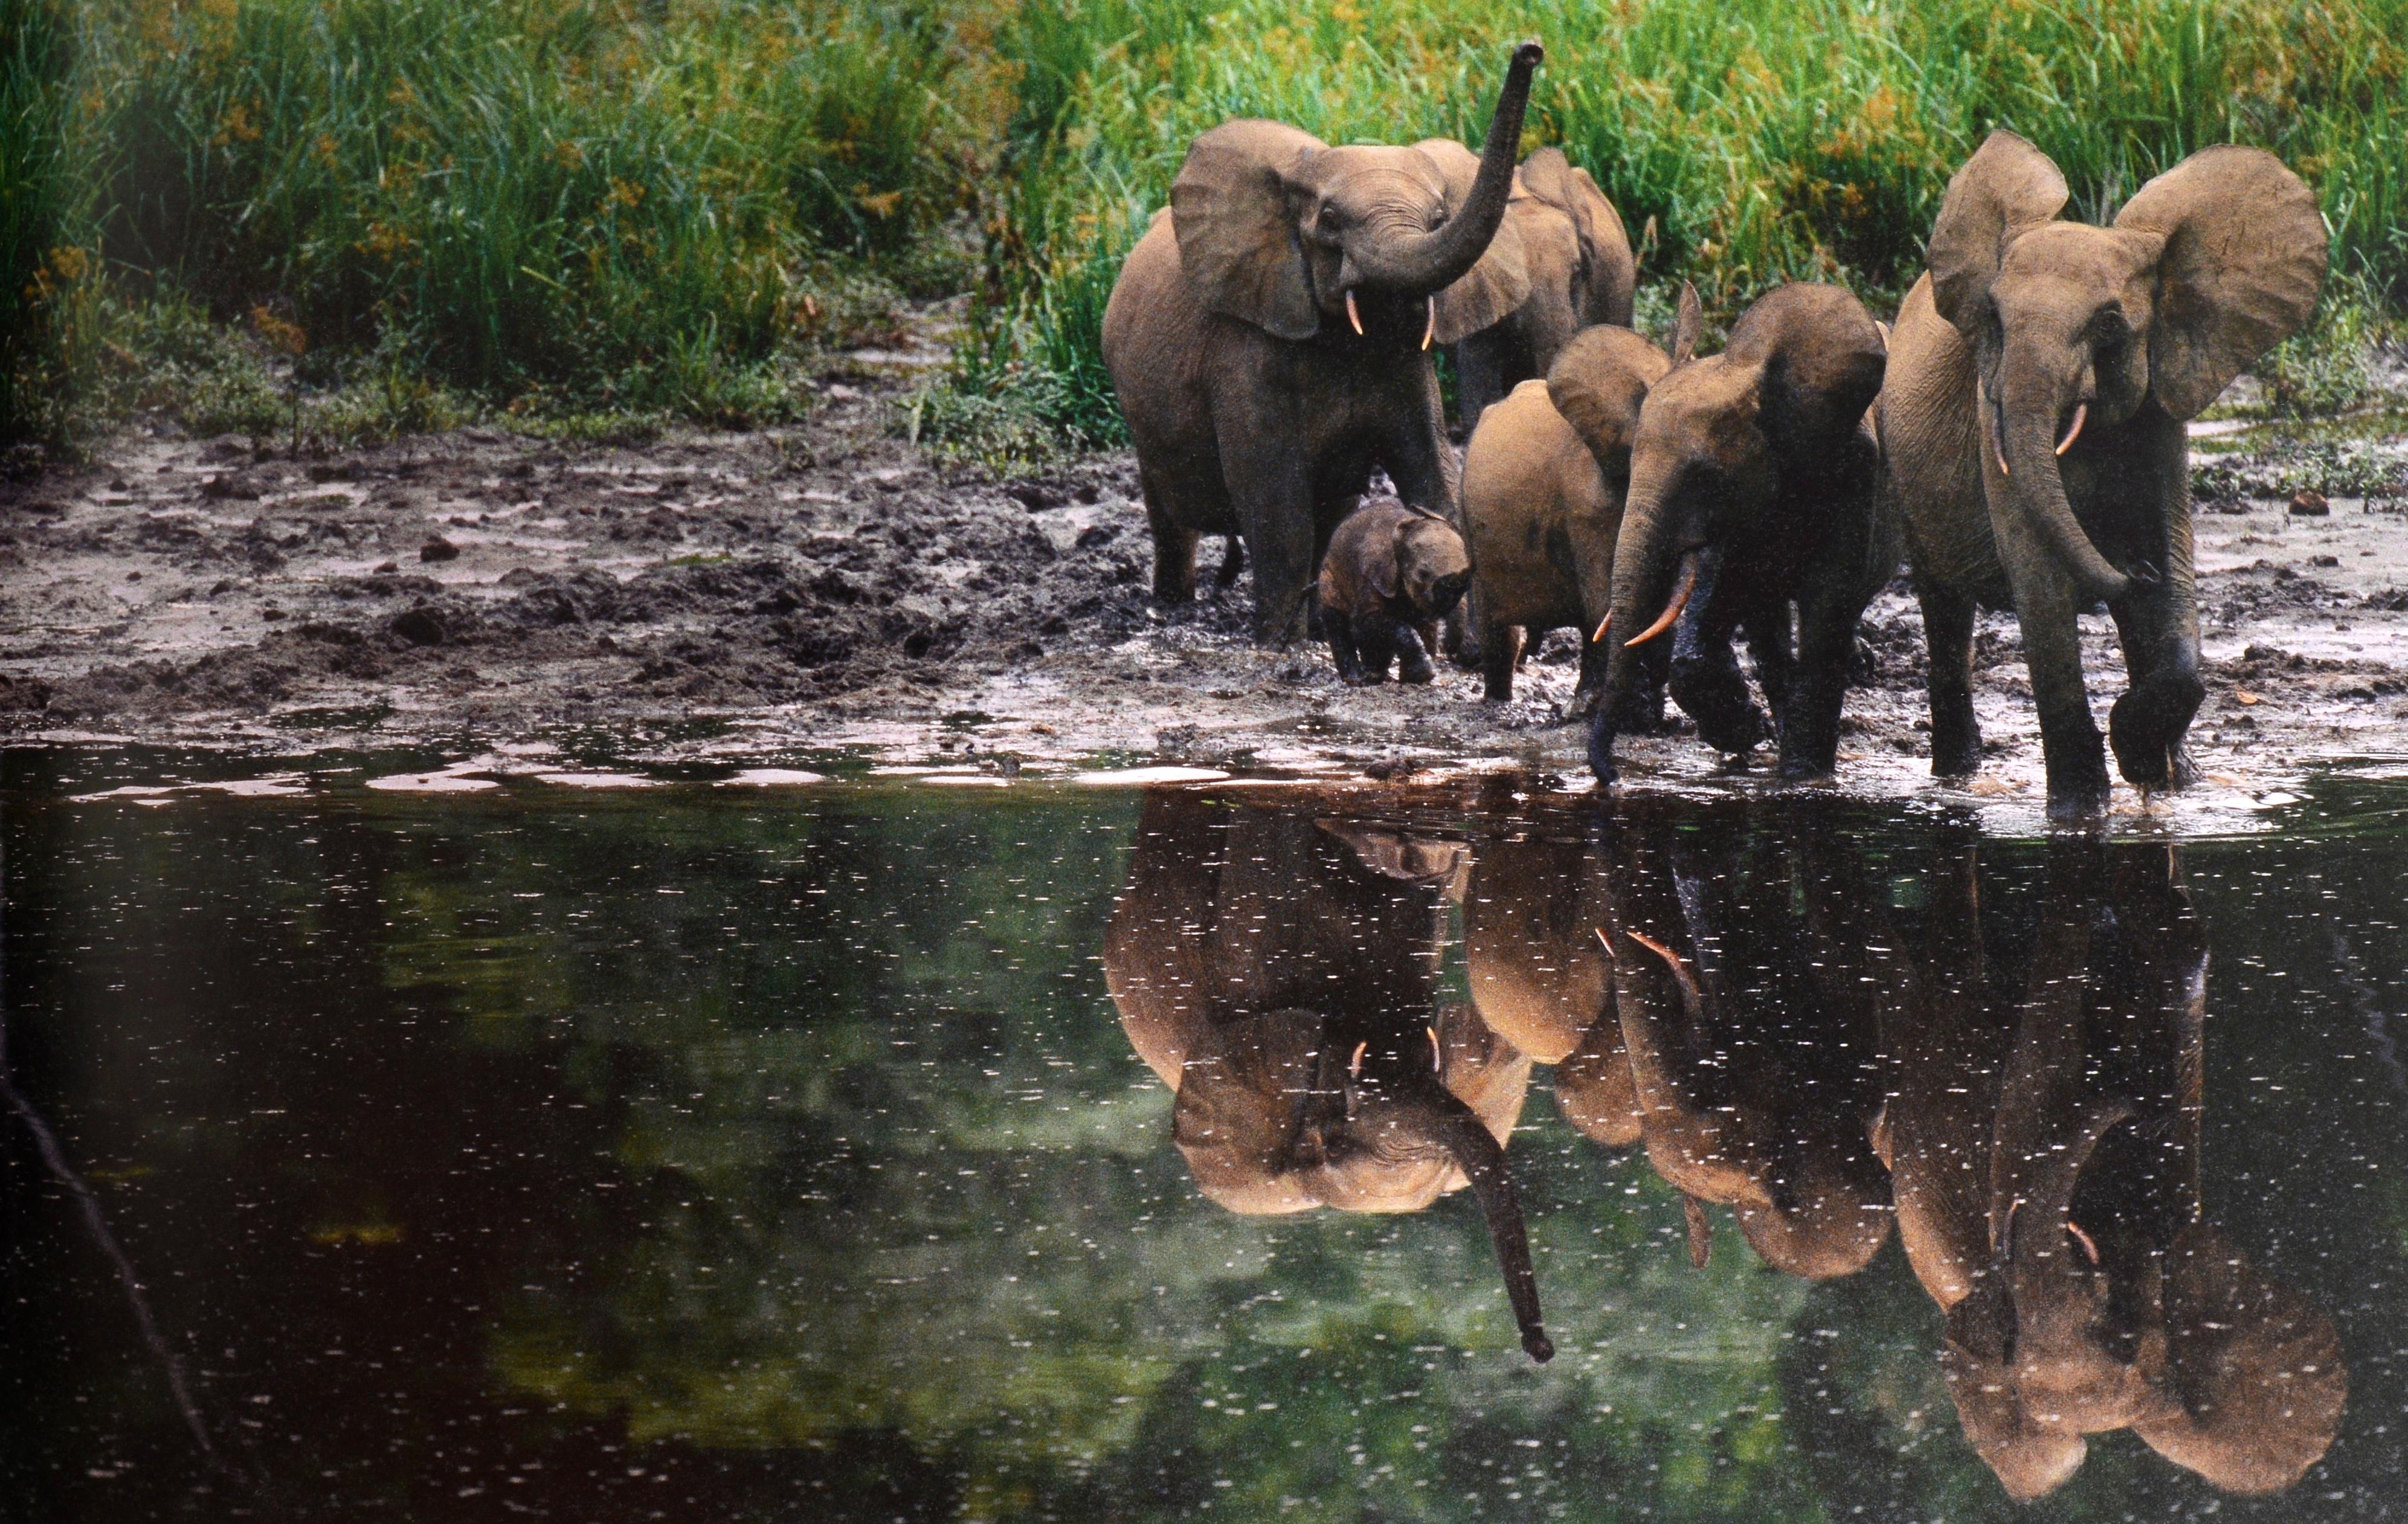 Earth to Sky: Among Africa's Elephants, a Species in Crisis von Michael Nichols (amerikanisch) im Angebot